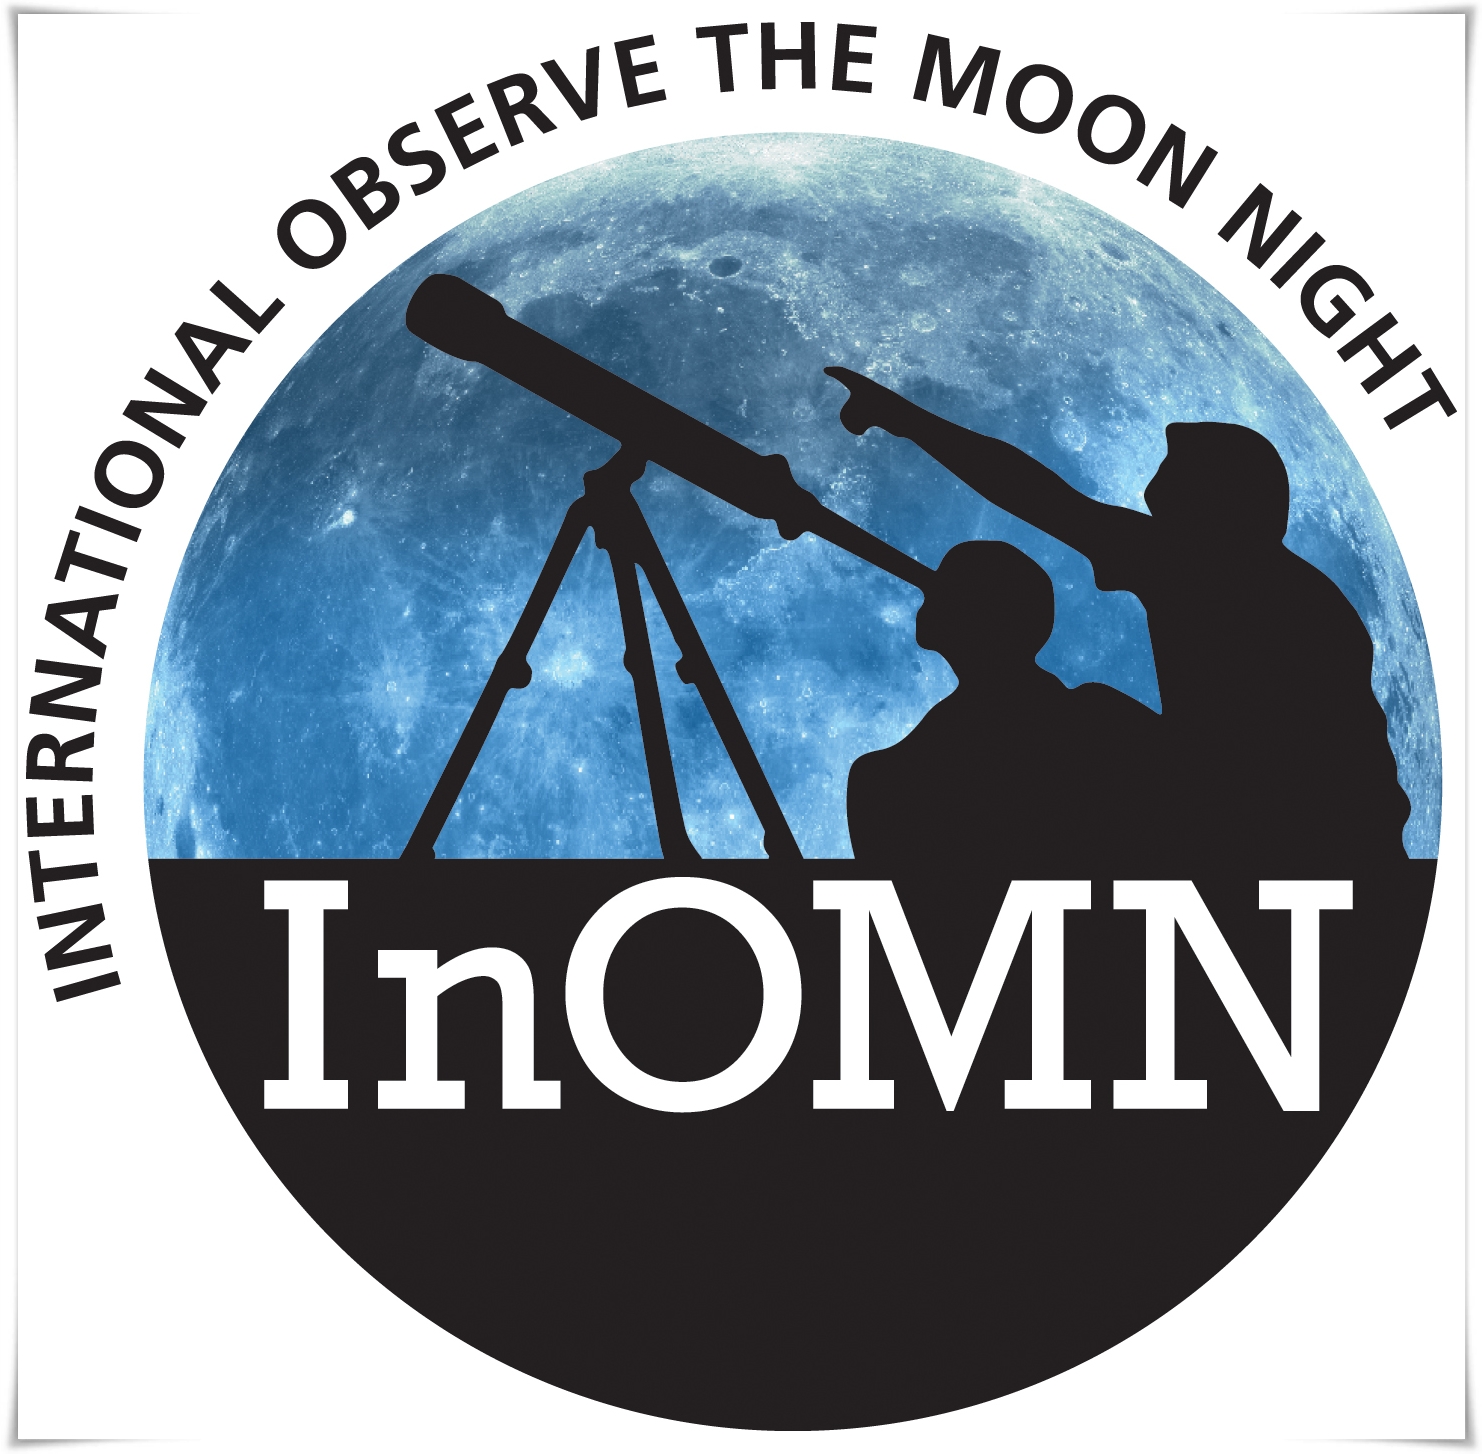 International Observe The Moon Night